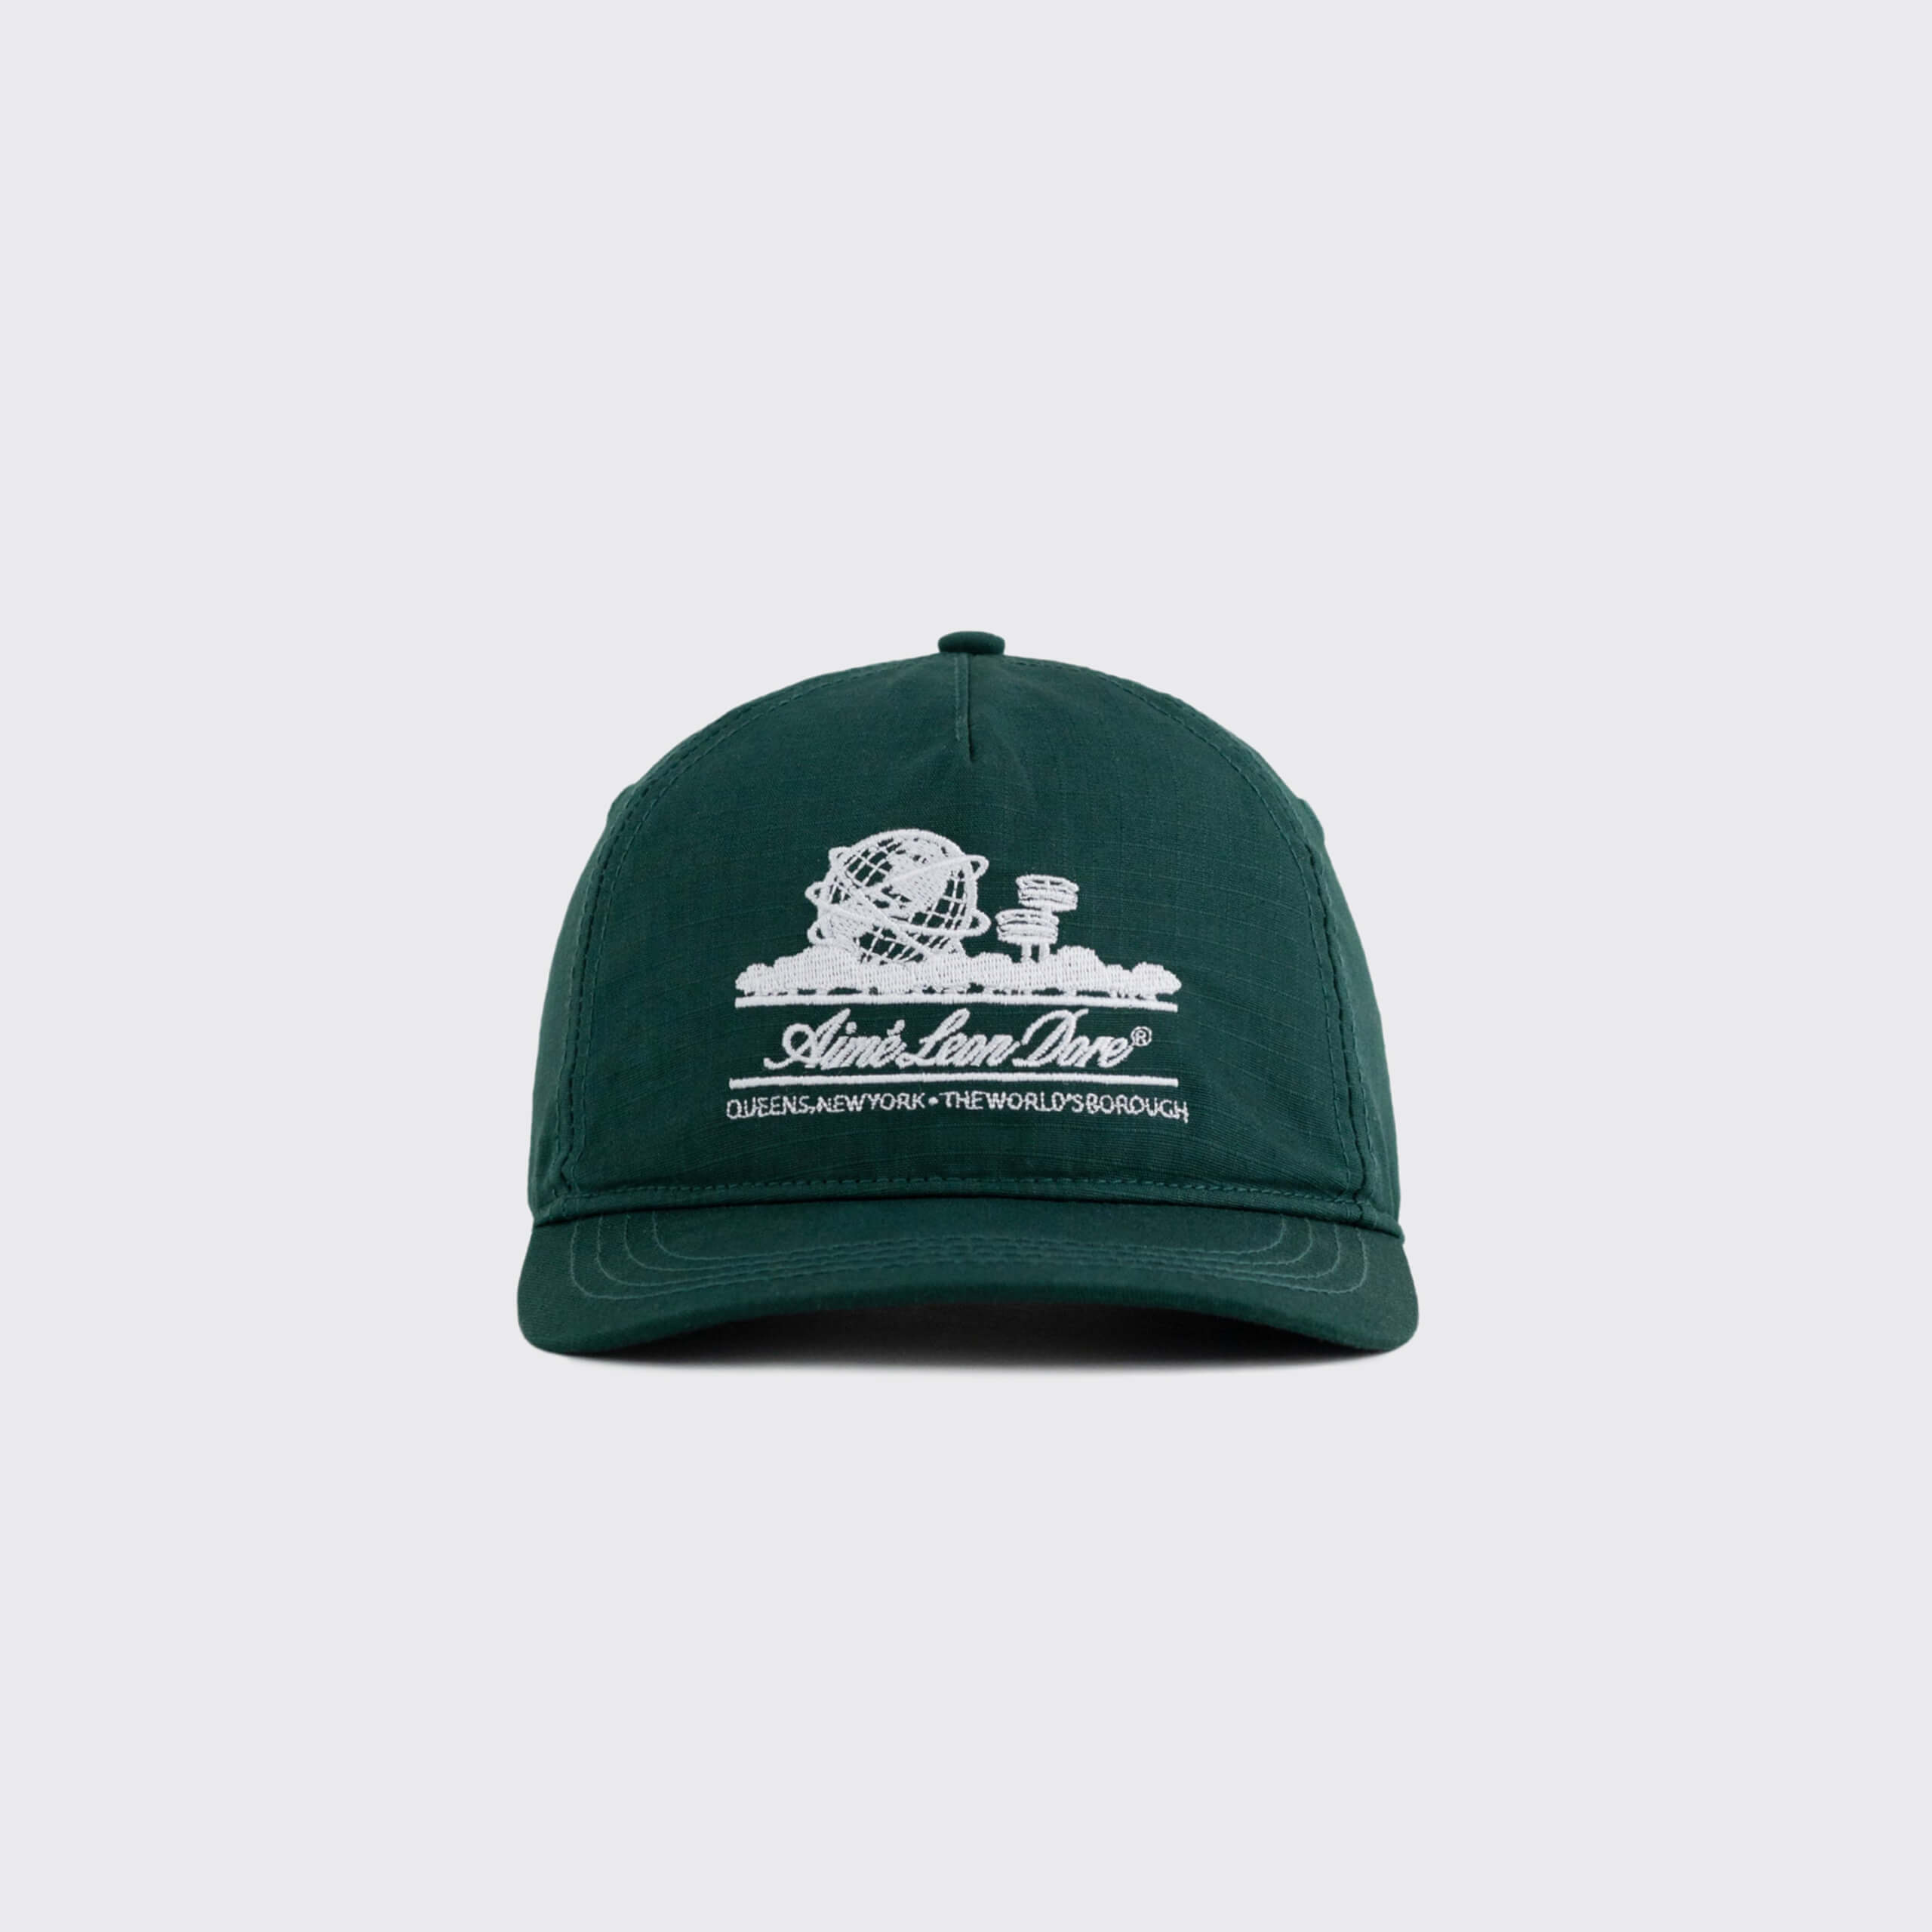 unisphere-hat-botanical-green_p2